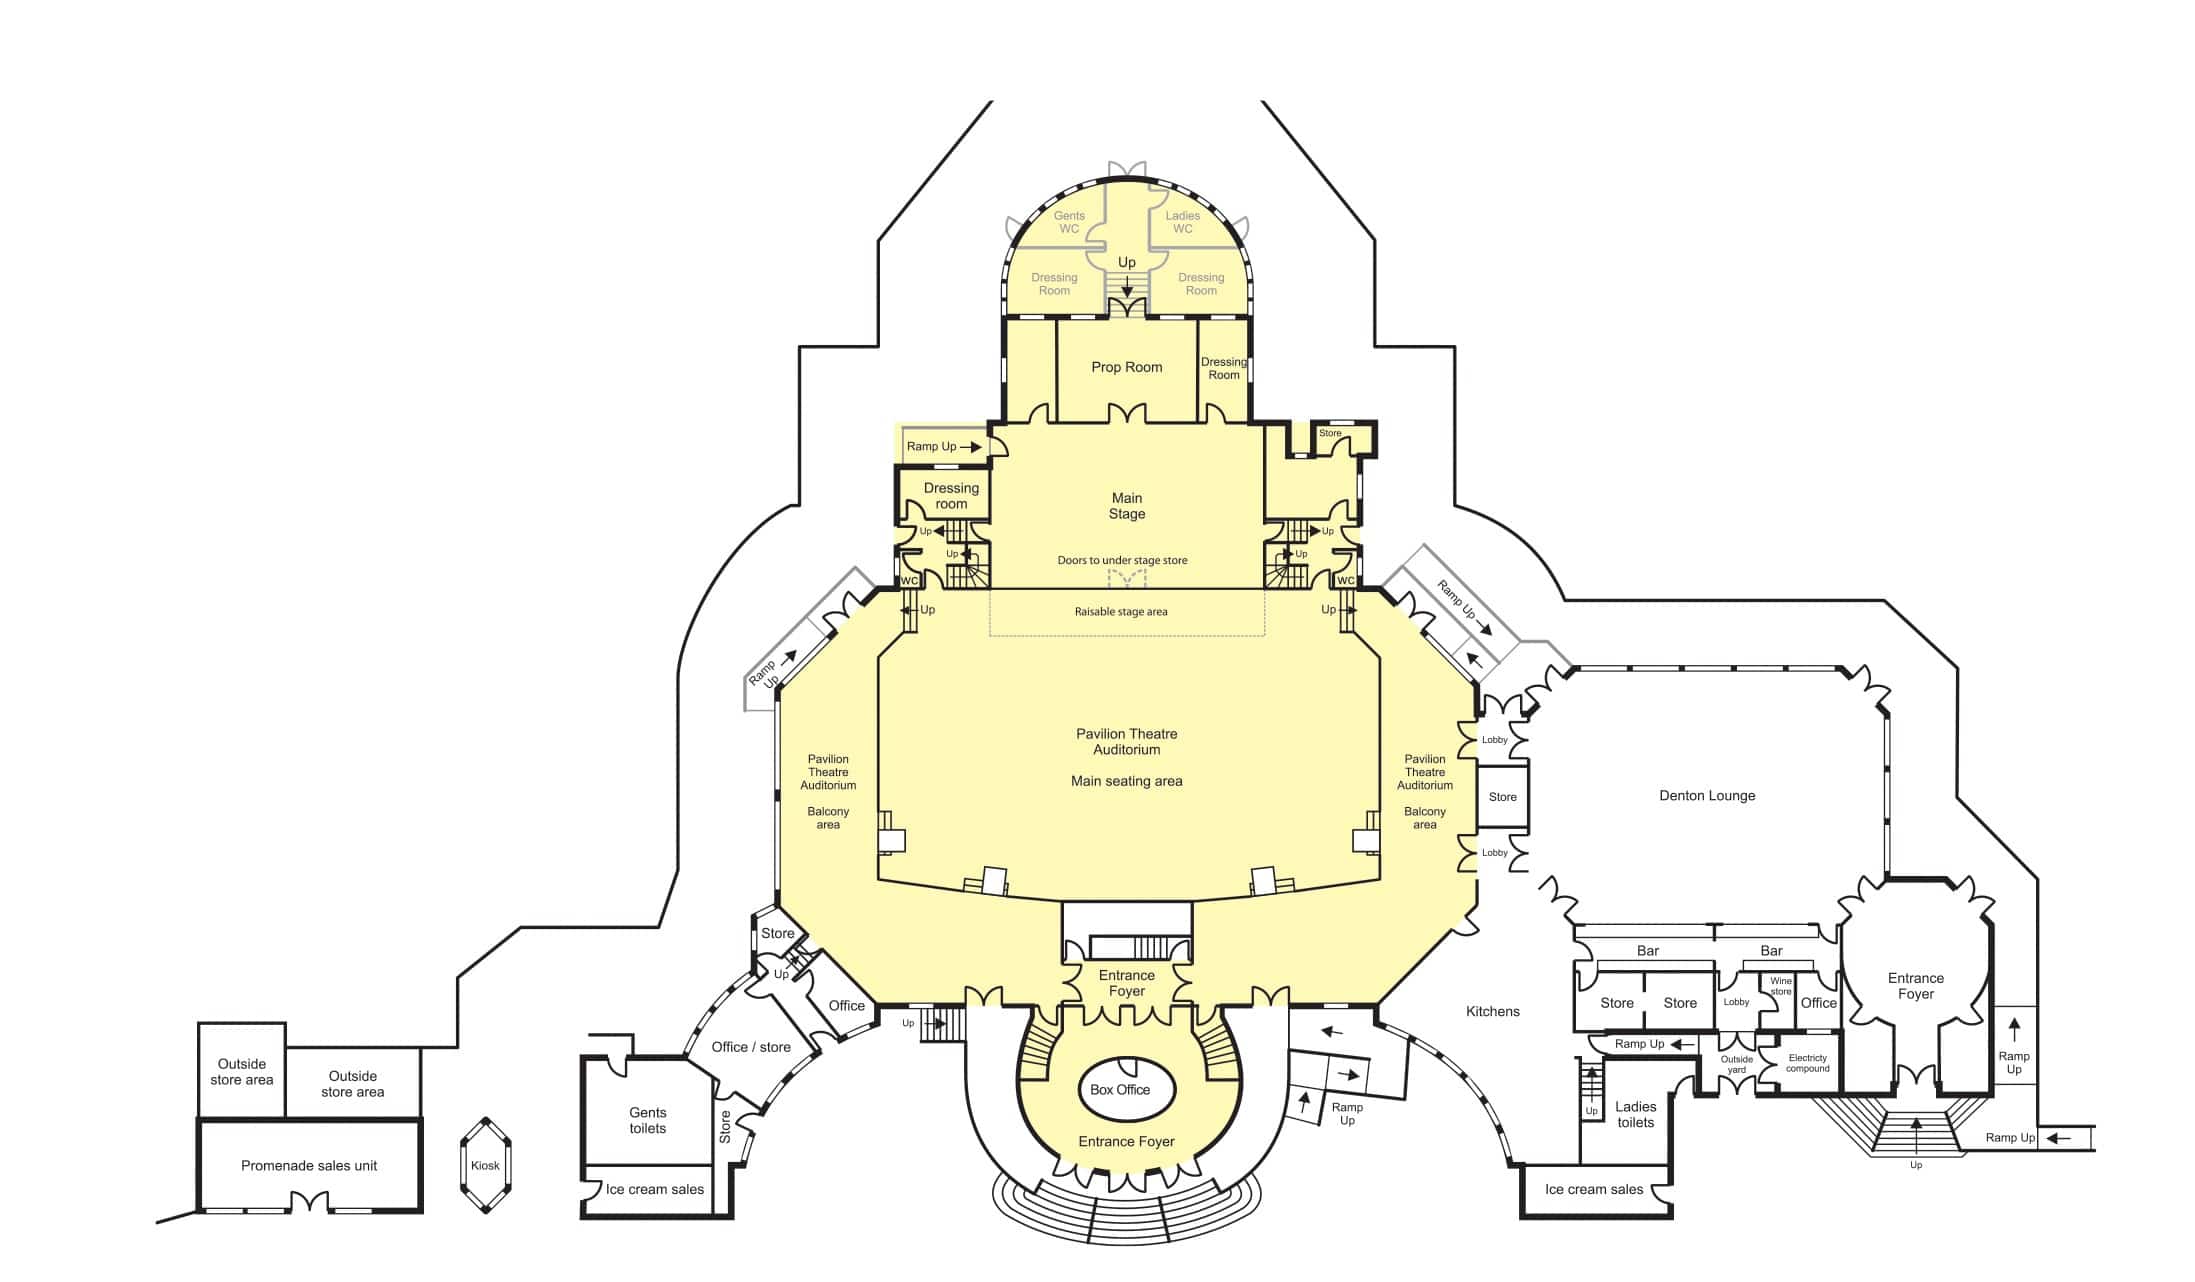 Pavilion Theatre - Floor Plan